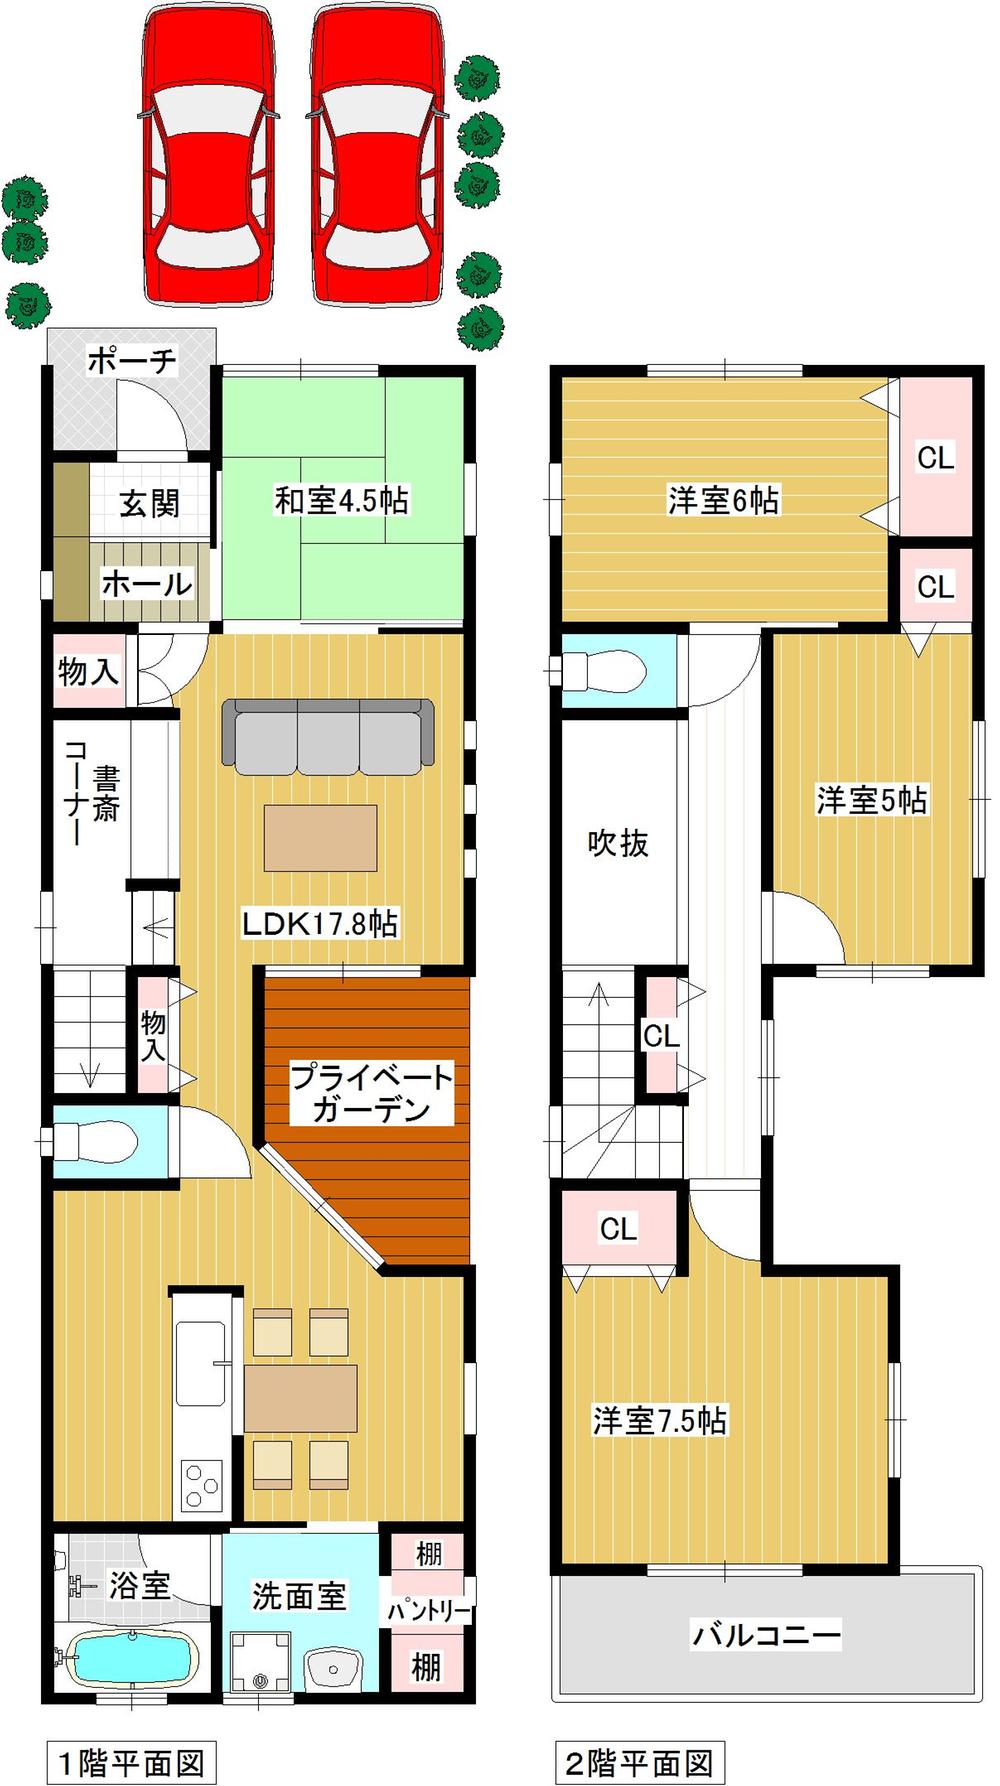 Floor plan. Price 31,800,000 yen, 4LDK, Land area 103.28 sq m , Building area 98.1 sq m